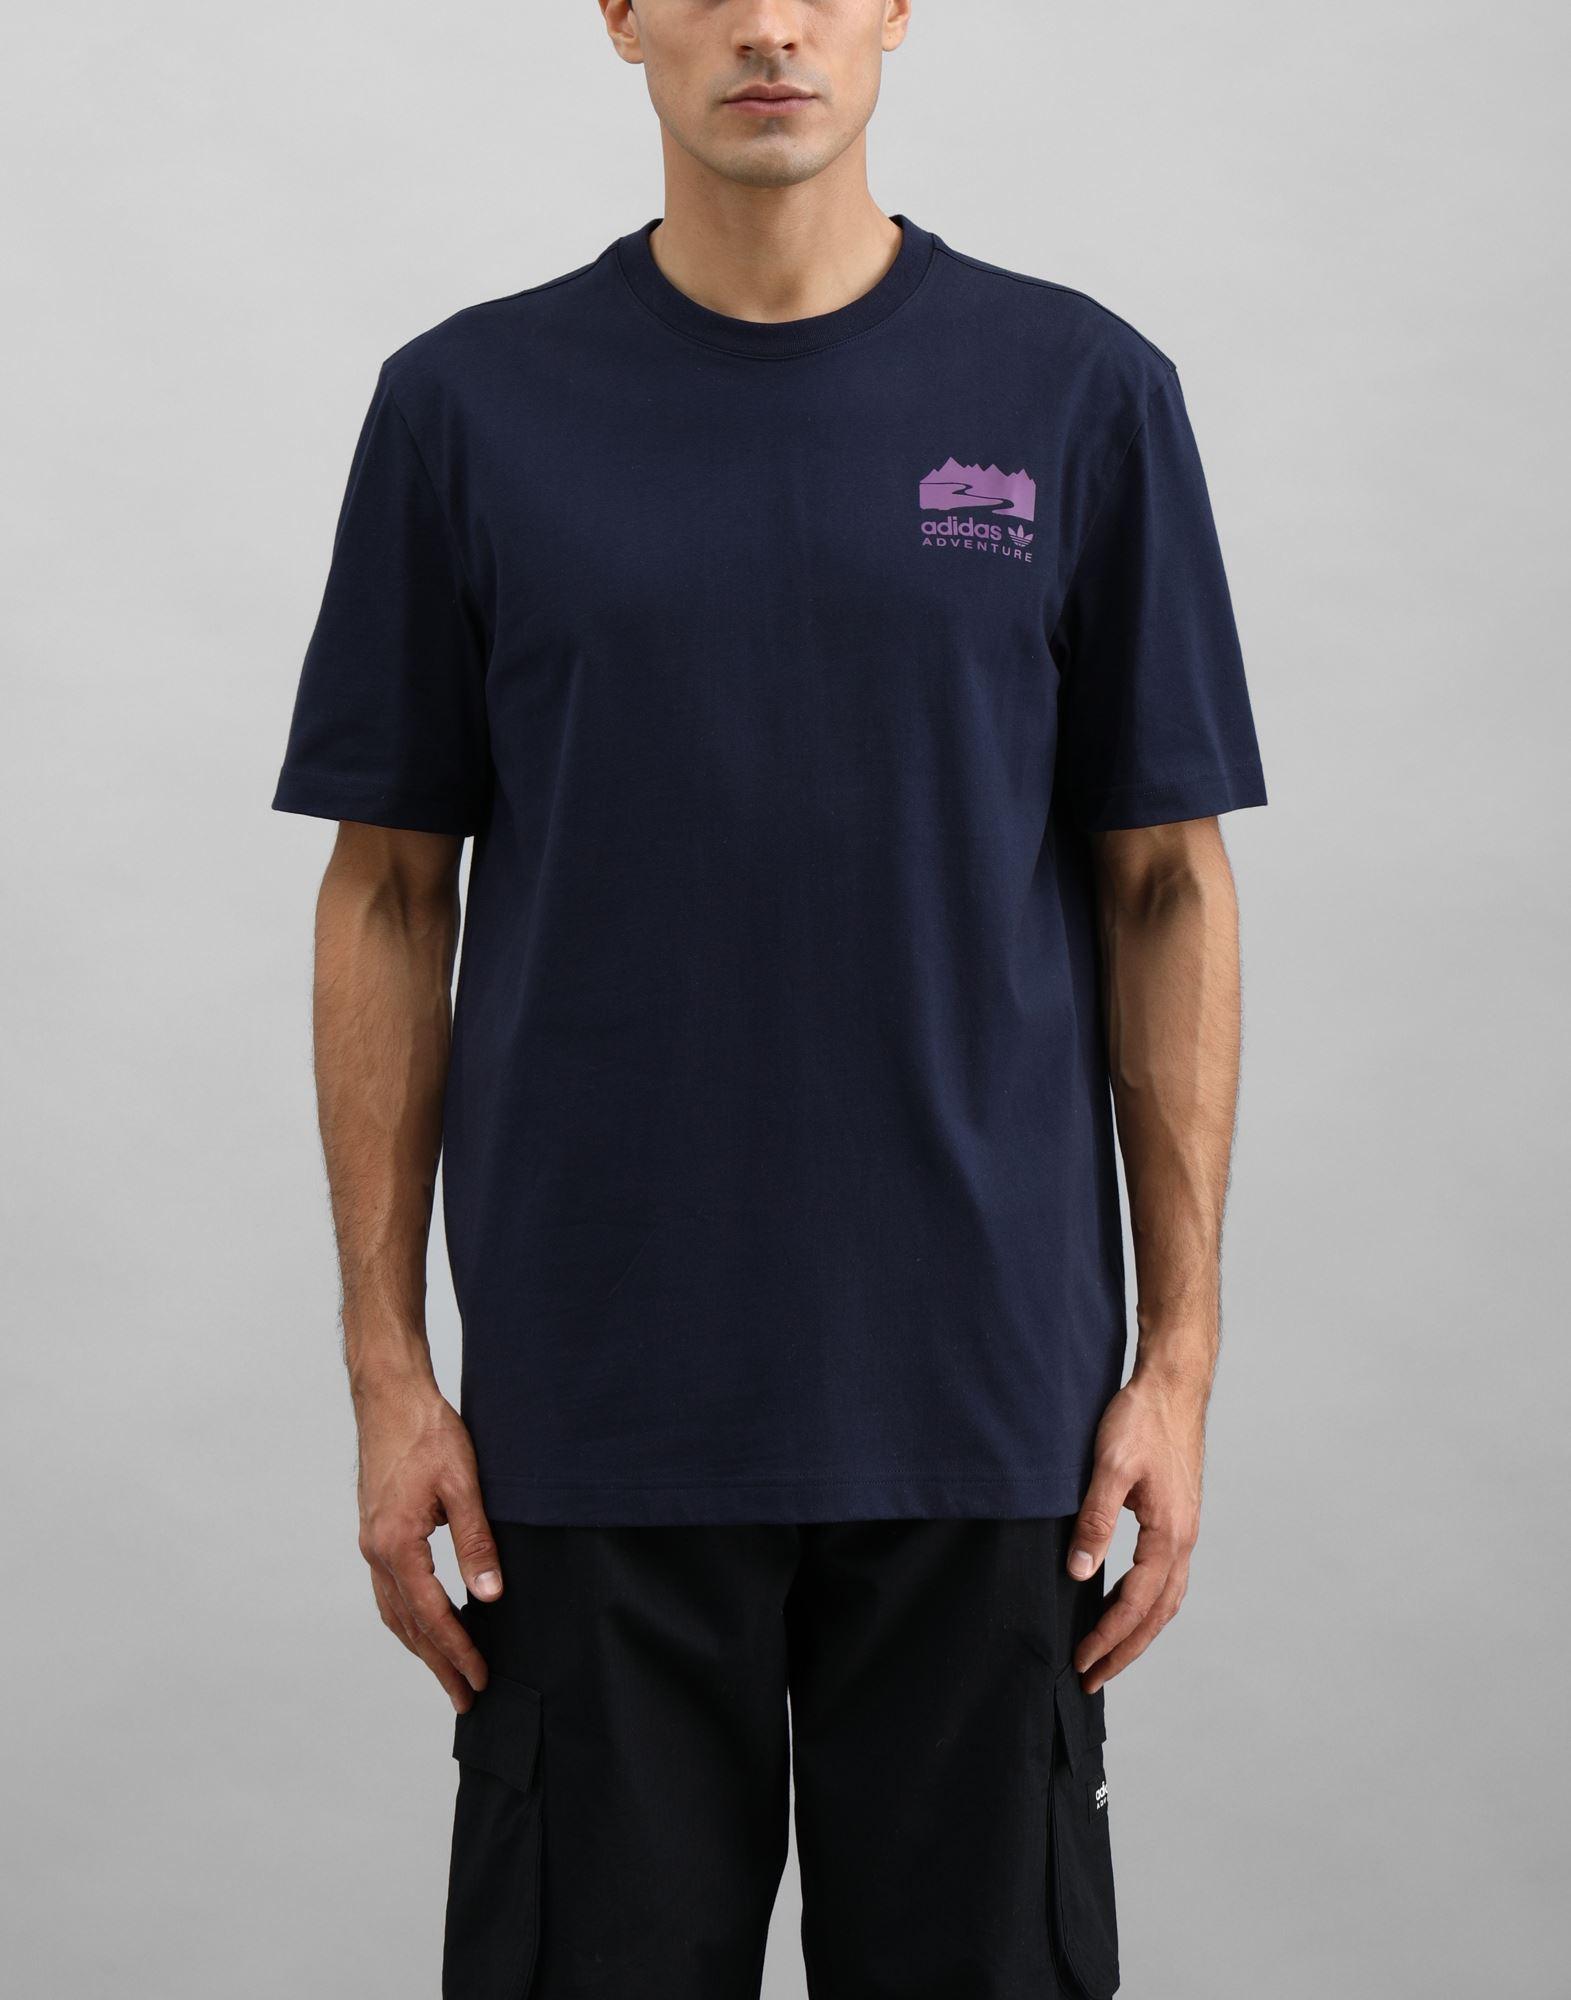 adidas Originals T-shirt in Dark Blue (Blue) for Men - Lyst